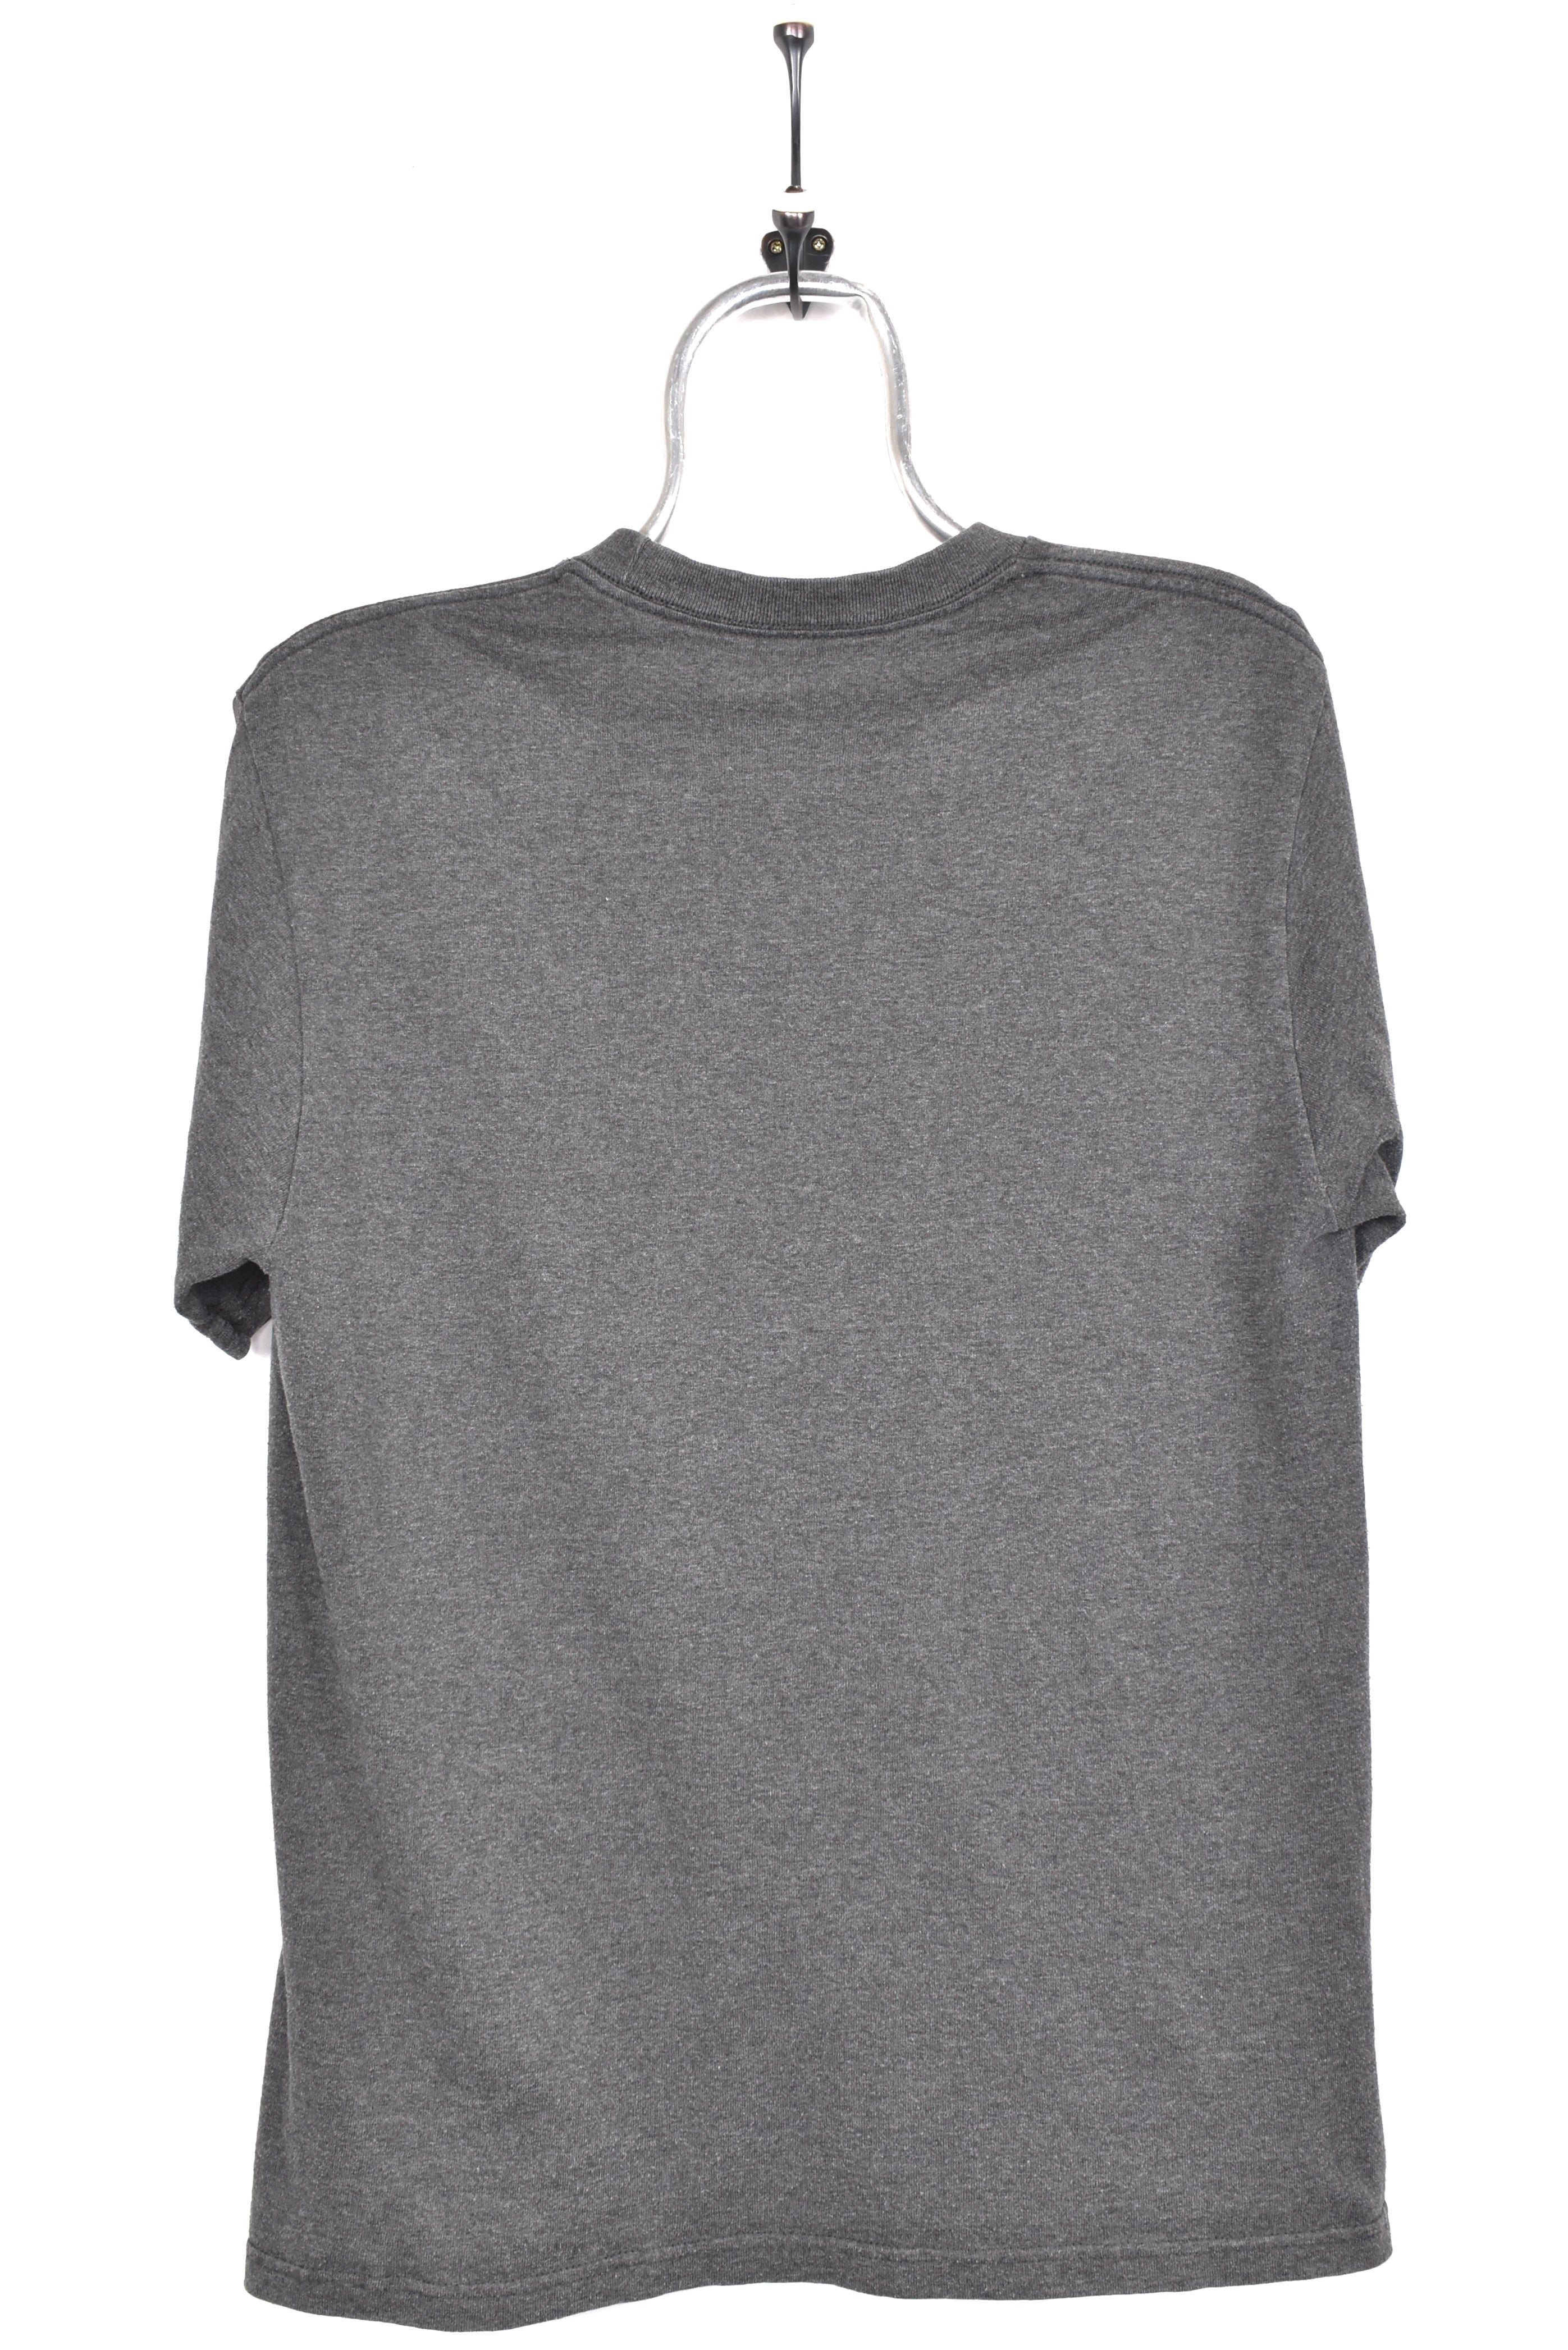 Vintage Denver Broncos shirt, NFL grey graphic tee - AU Medium PRO SPORT